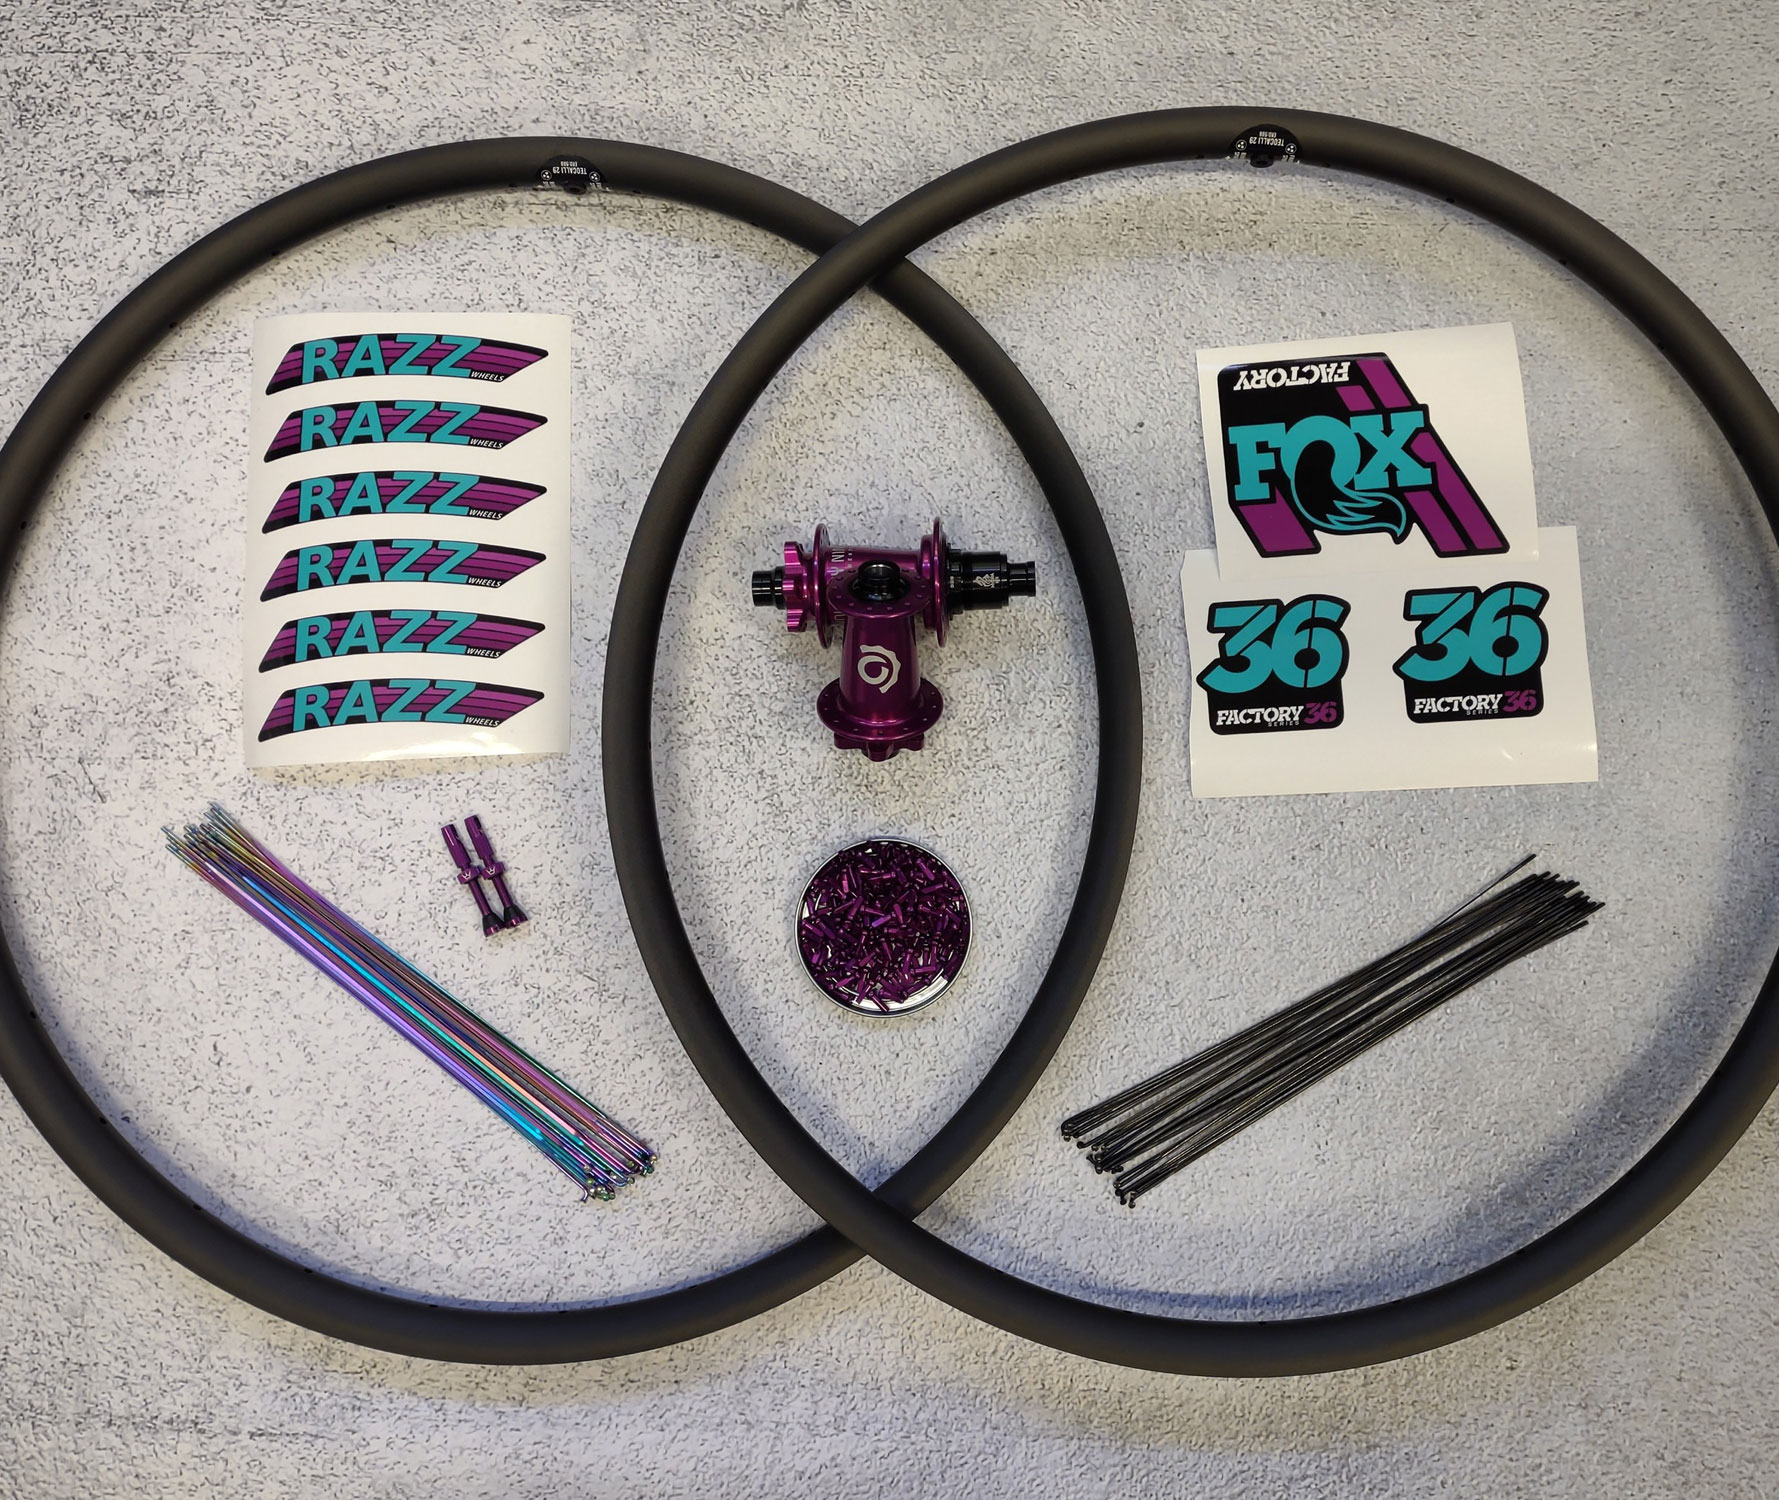 Mountain bike wheelset components by RAZZ Wheels.